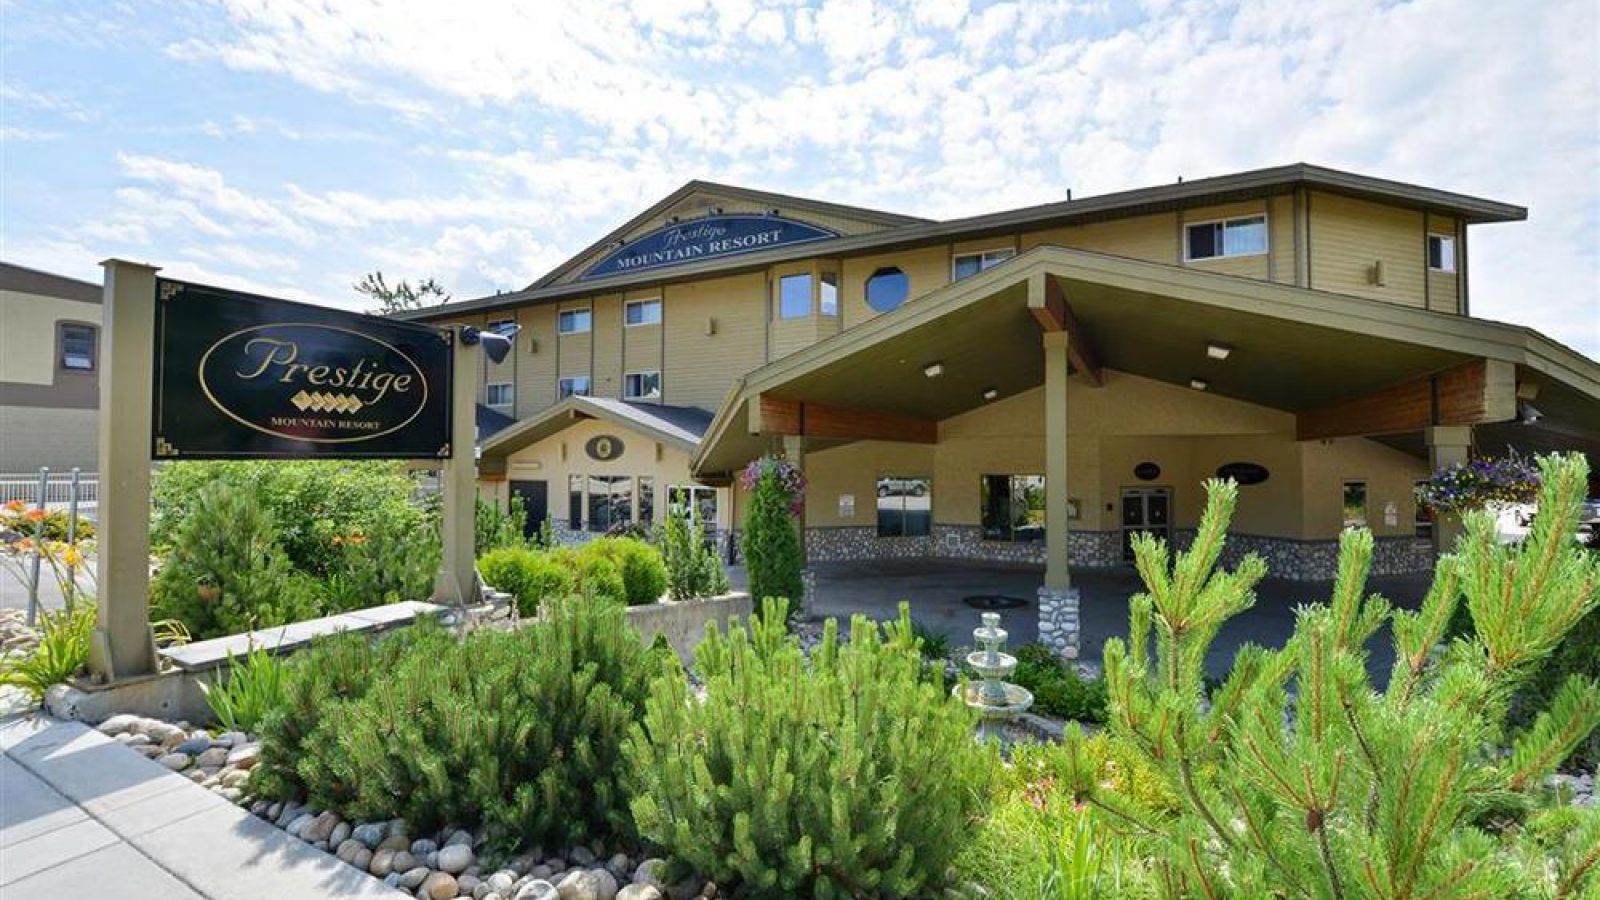 The Prestige Mountain Resort Rossland - East Kootenays golf packages